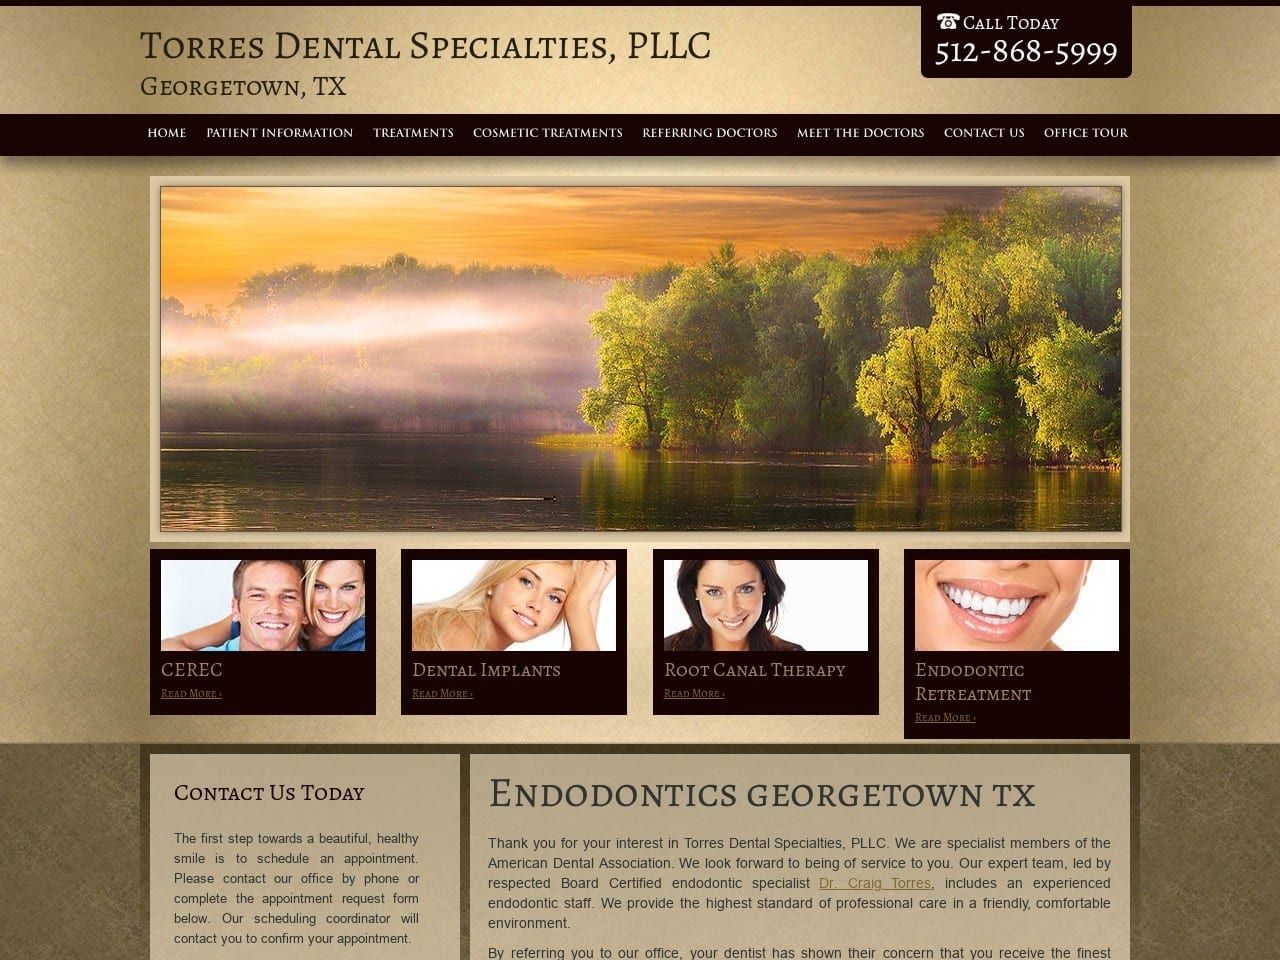 Torres Dental Specialties Pllc Website Screenshot from torres-dental-specialties.com